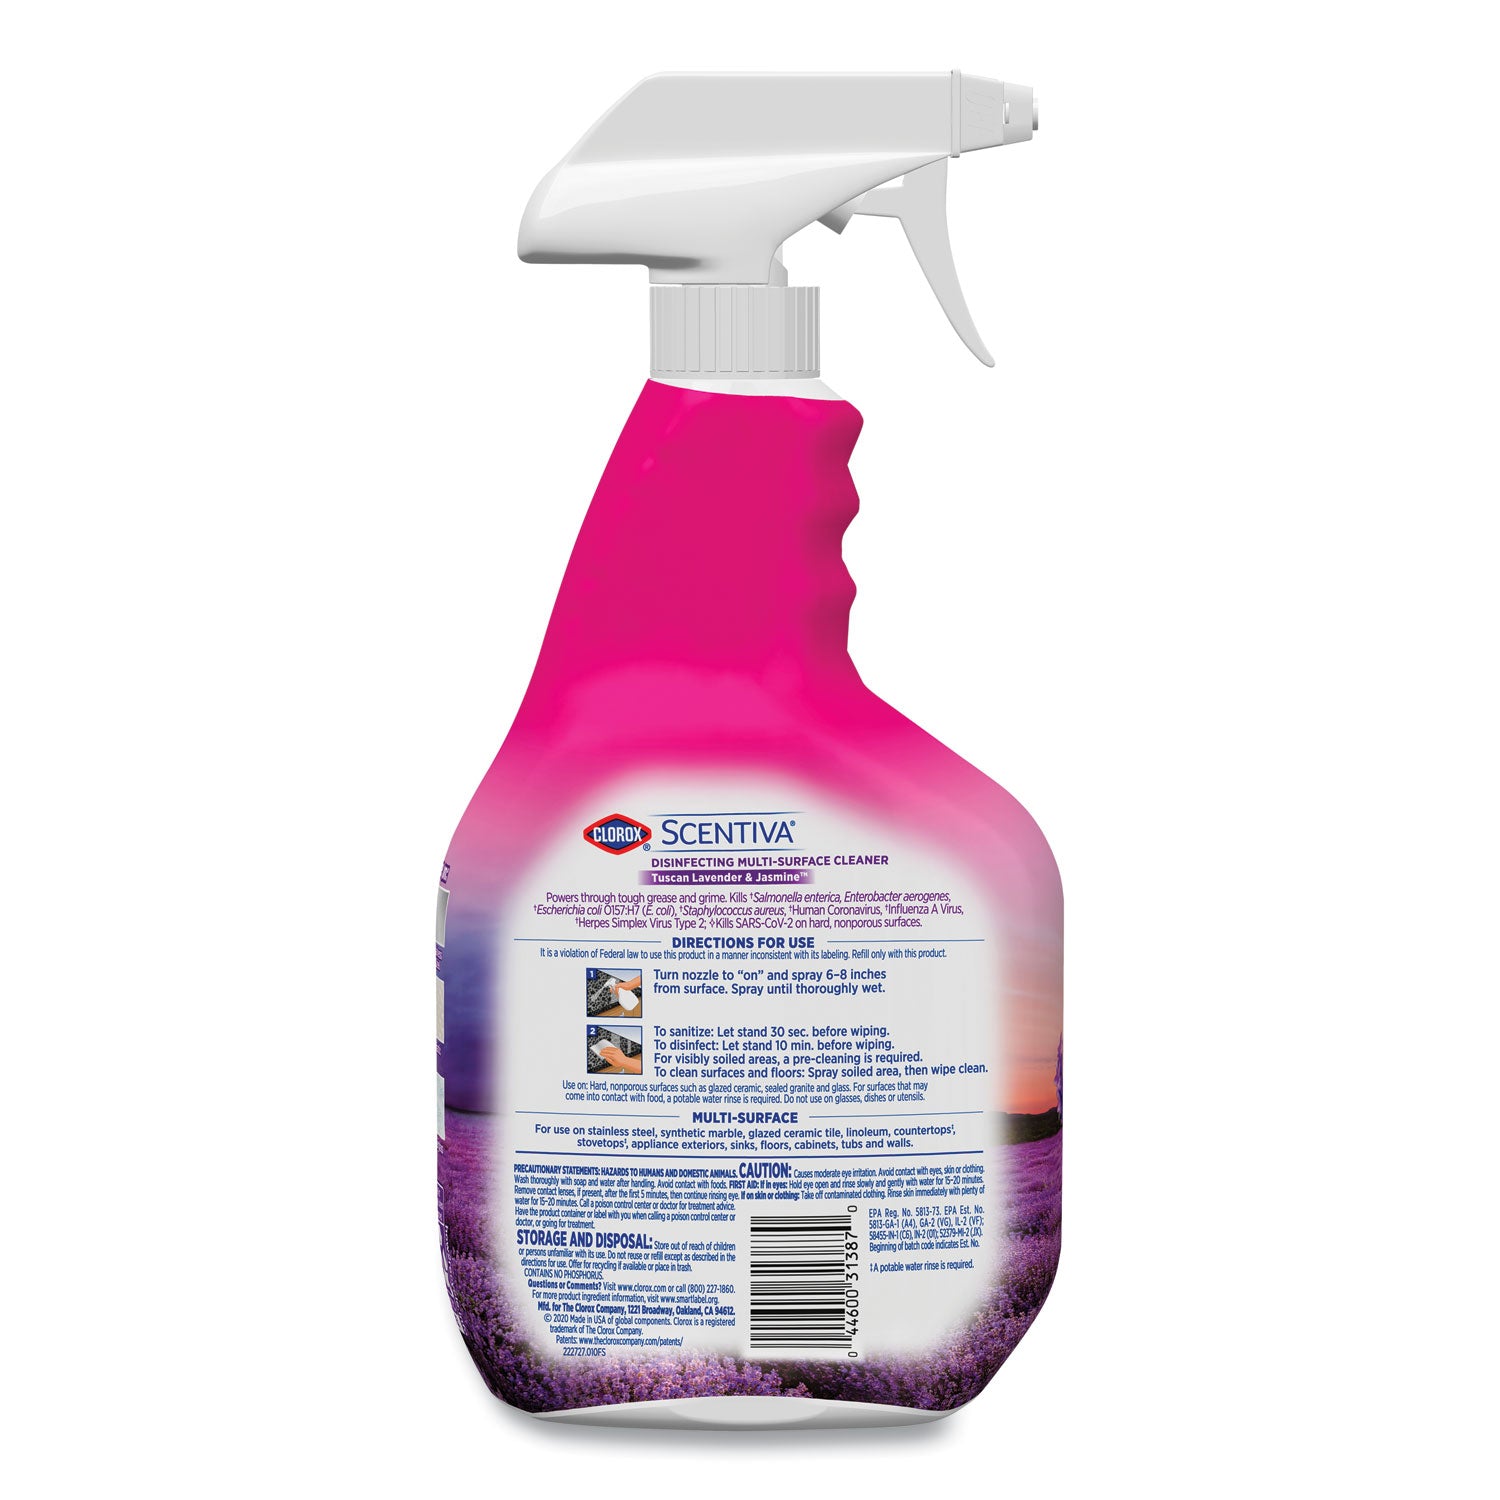 scentiva-multi-surface-cleaner-tuscan-lavender-and-jasmine-32oz-spray-bottle_clo31387ea - 8